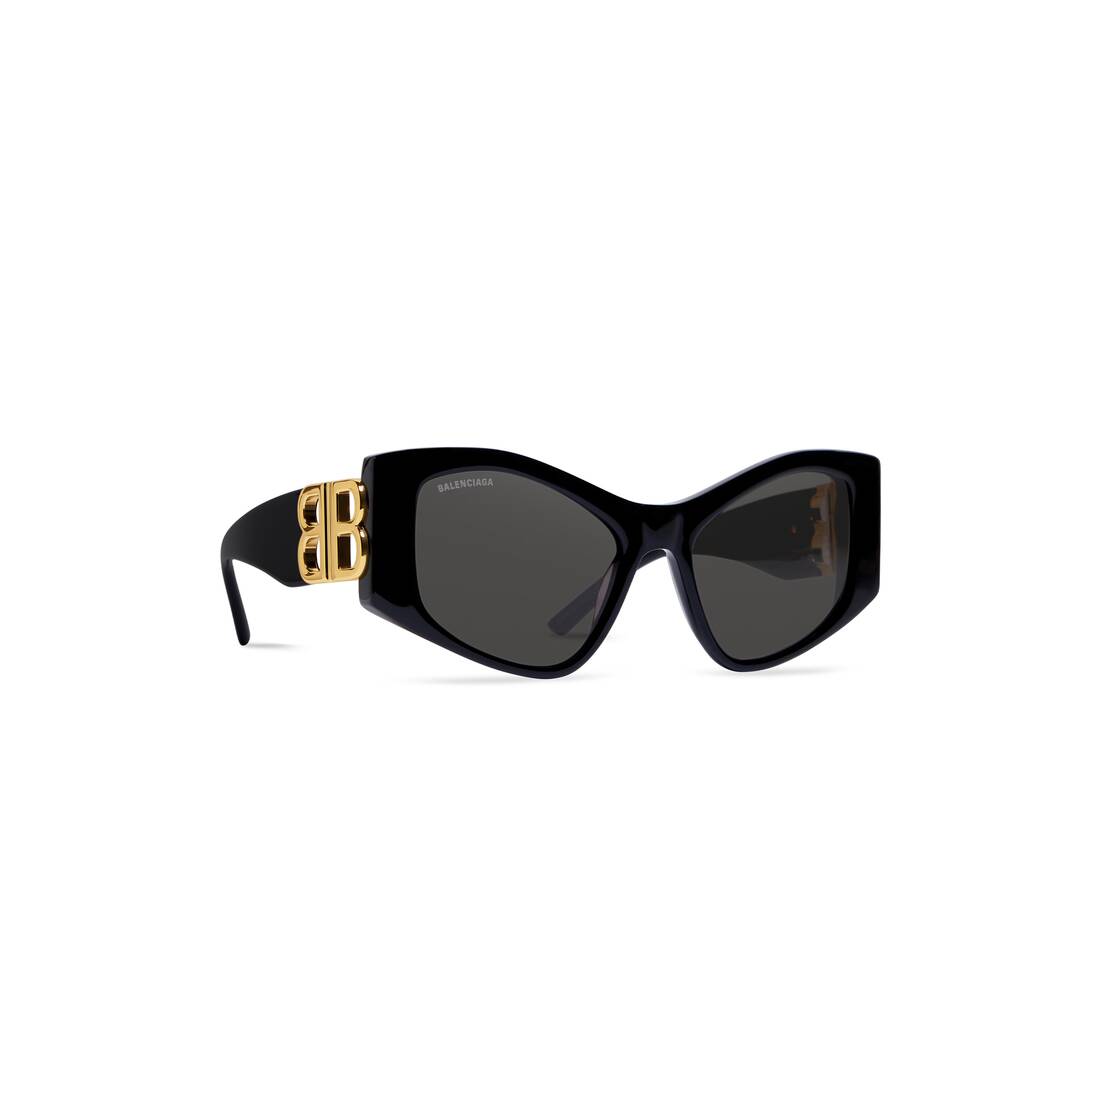 Women's Dynasty Xl D-frame Sunglasses in Black